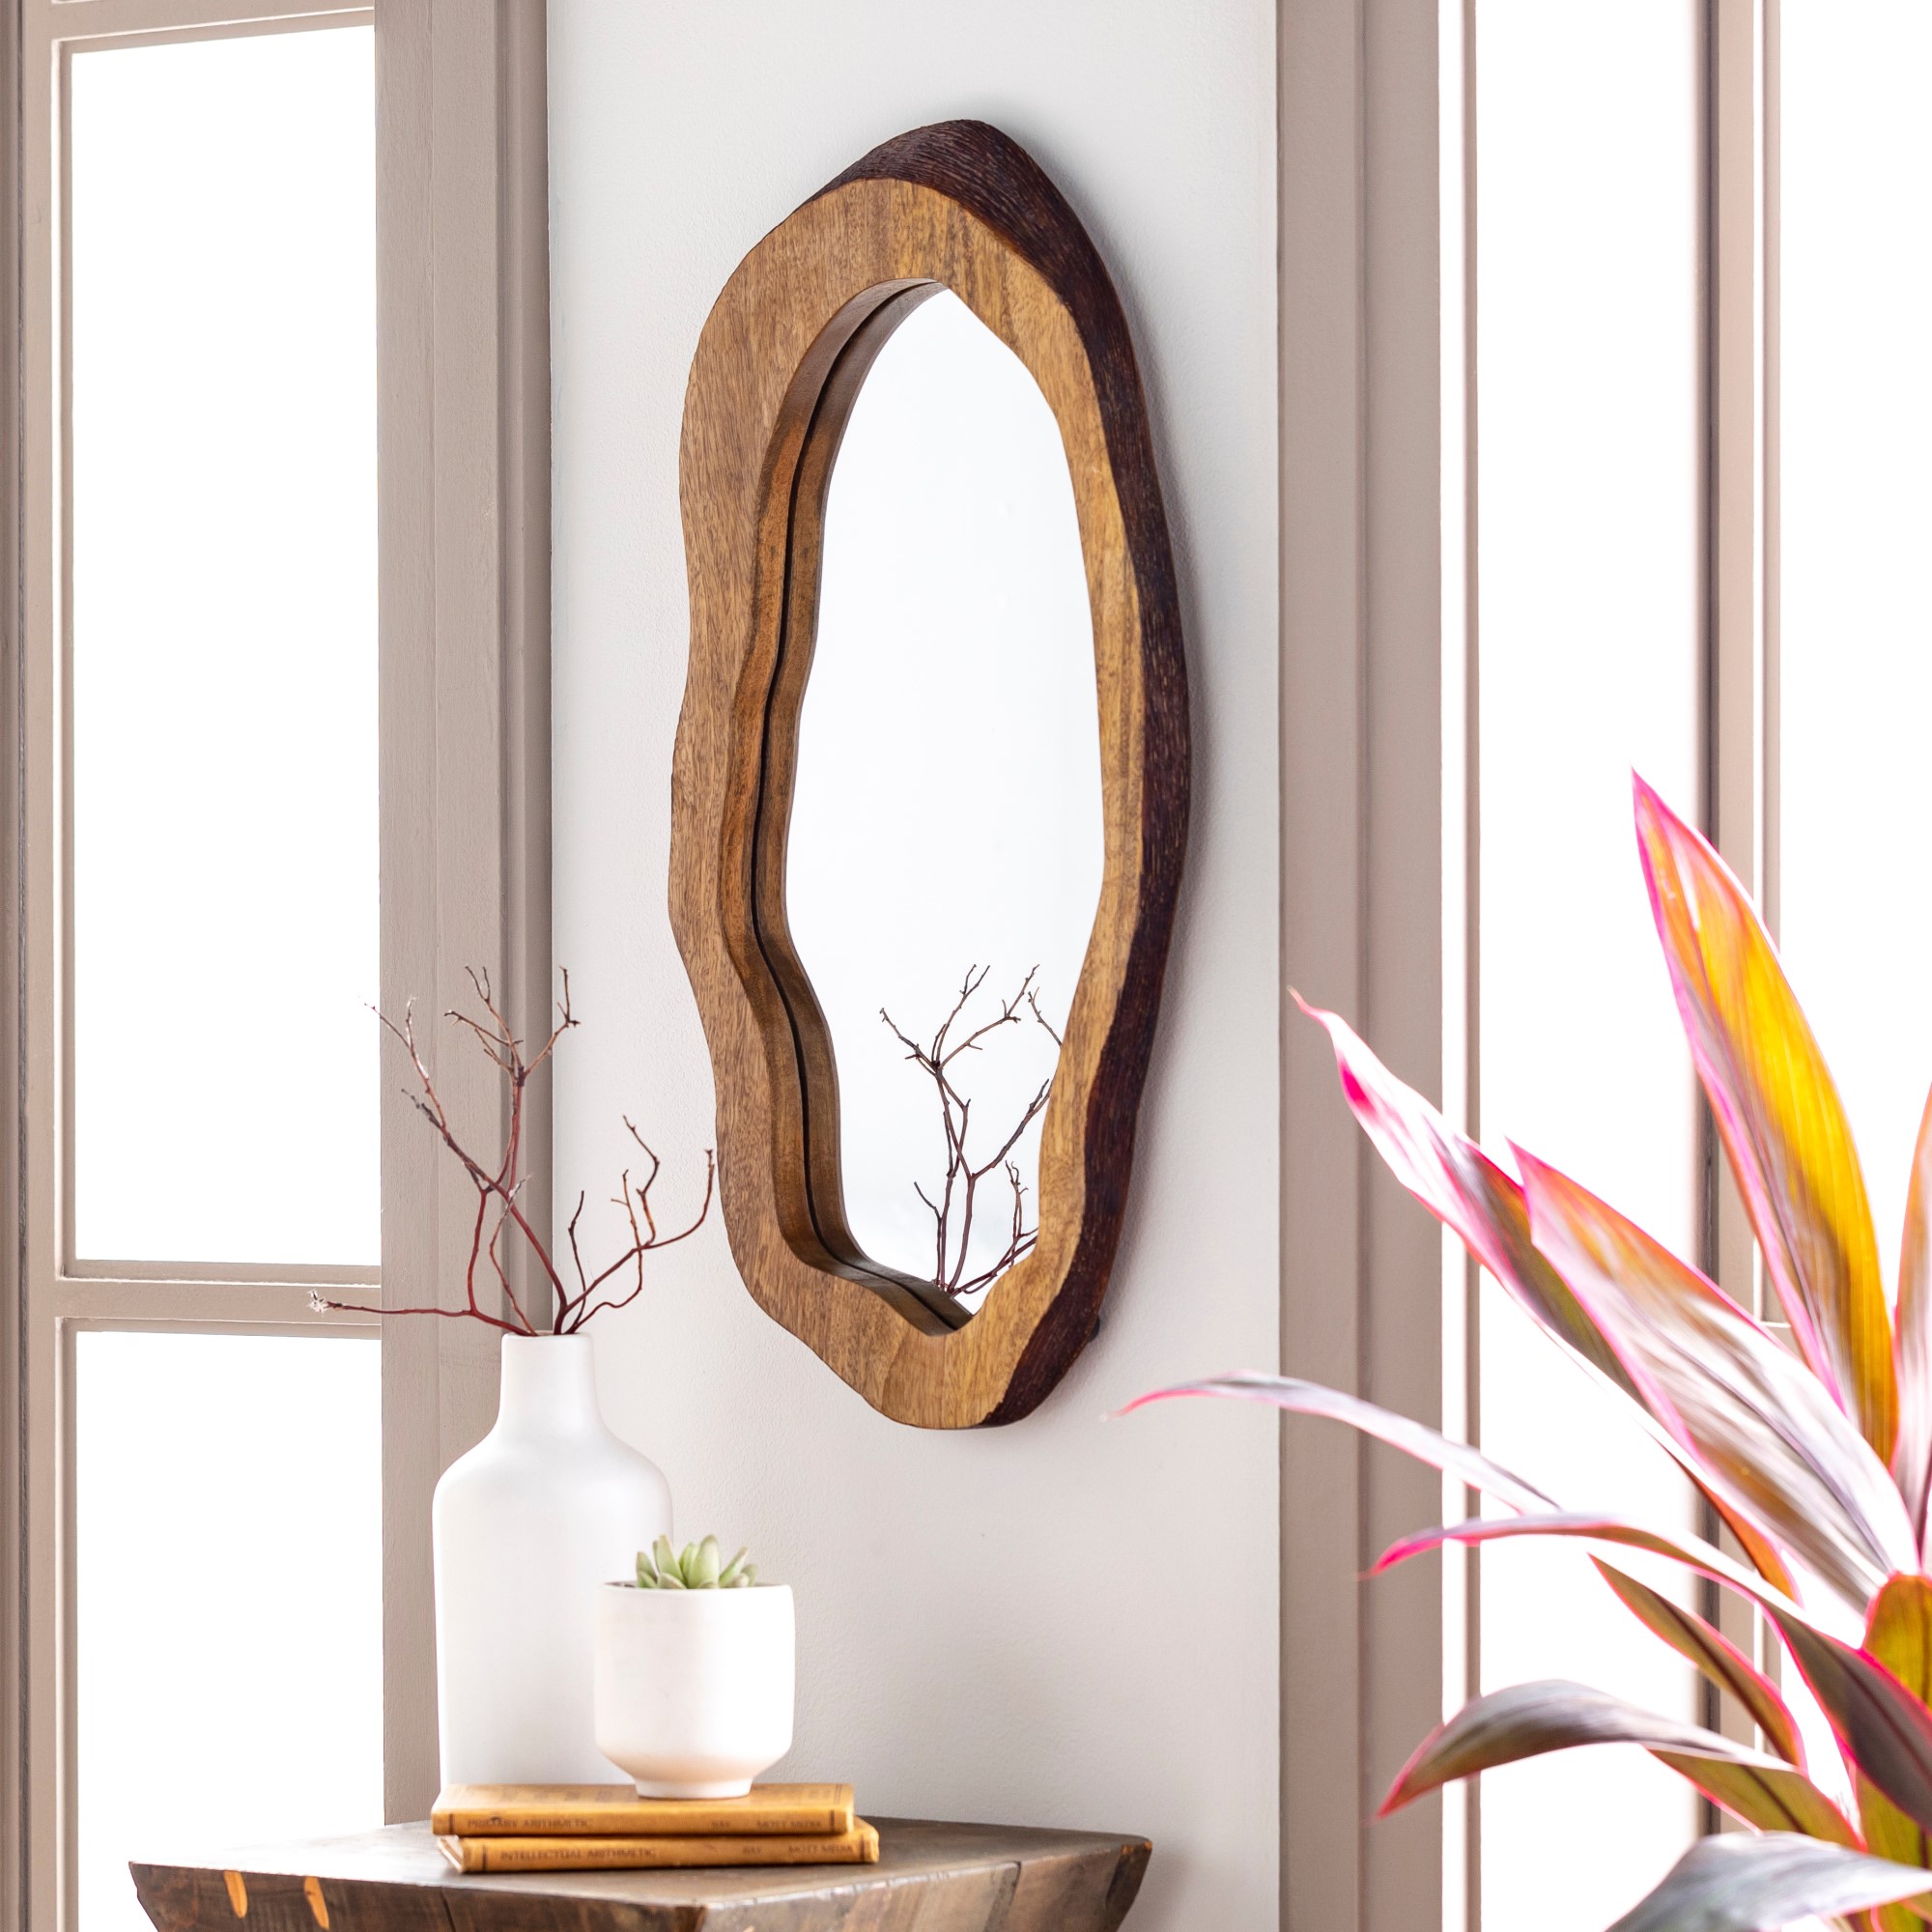 Fresco Make-up mirror wall-mounted - Zack 40109